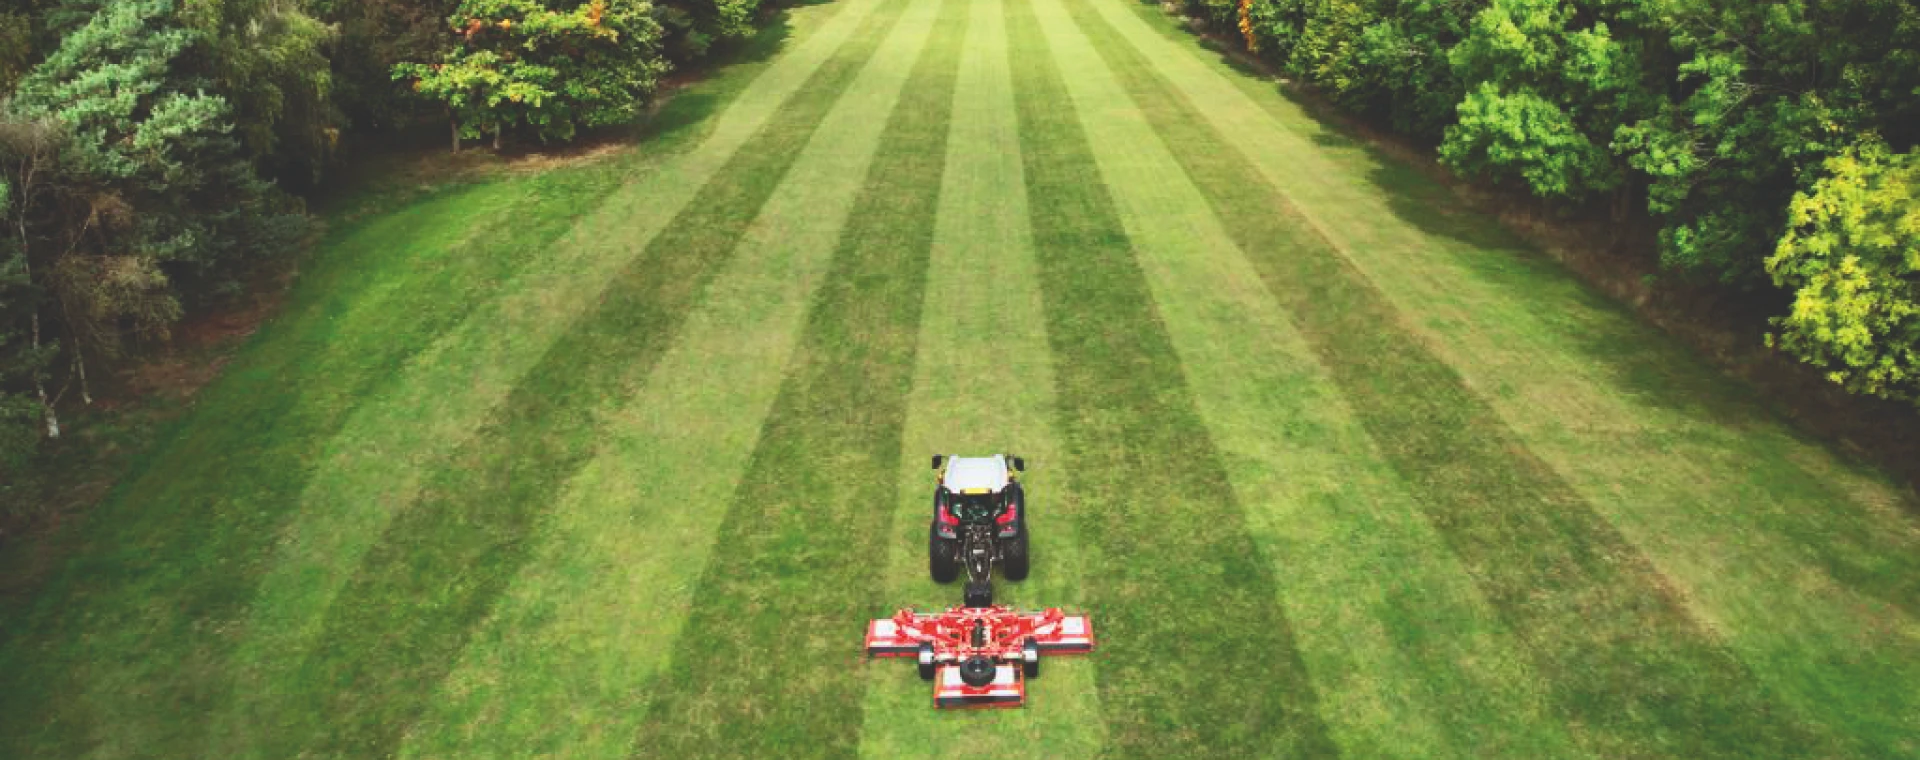 Tractor cutting grass aerial shot